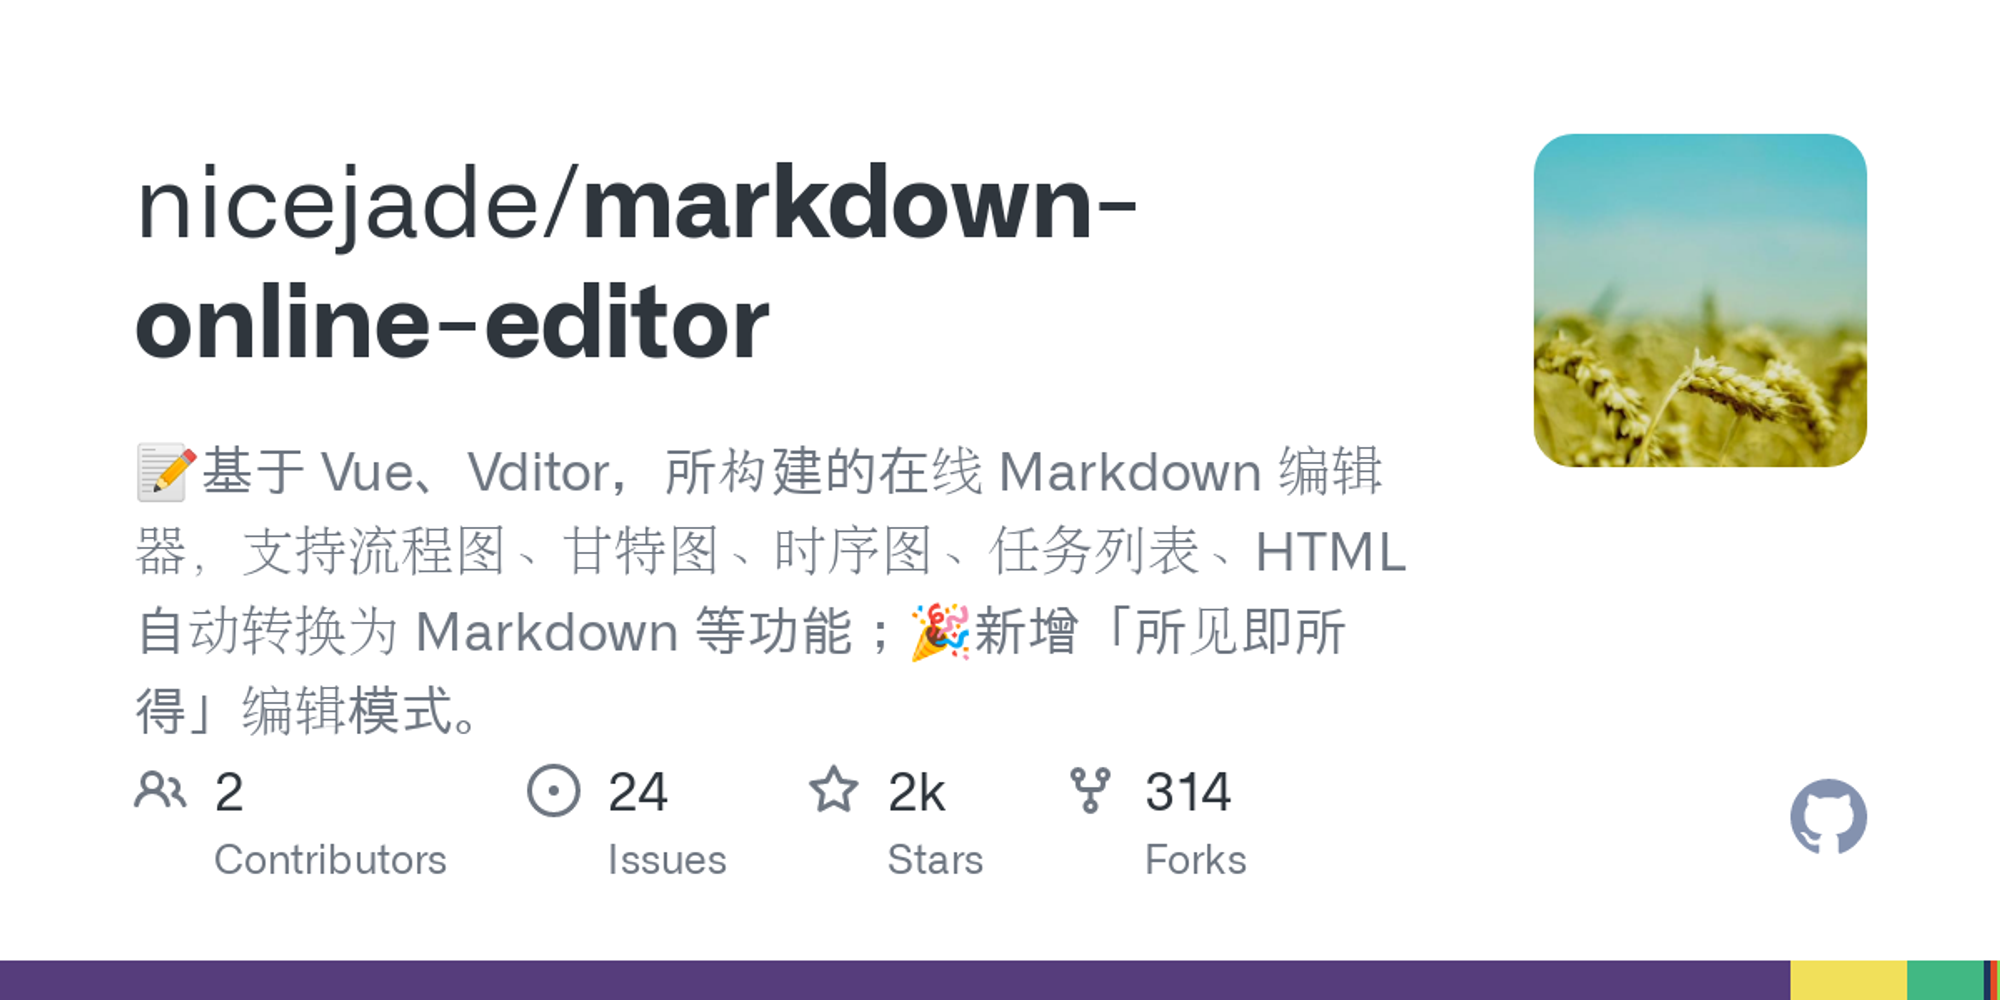 GitHub - nicejade/markdown-online-editor: 📝基于 Vue、Vditor，所构建的在线 Markdown 编辑器，支持流程图、甘特图、时序图、任务列表、HTML 自动转换为 Markdown 等功能；🎉新增「所见即所得」编辑模式。